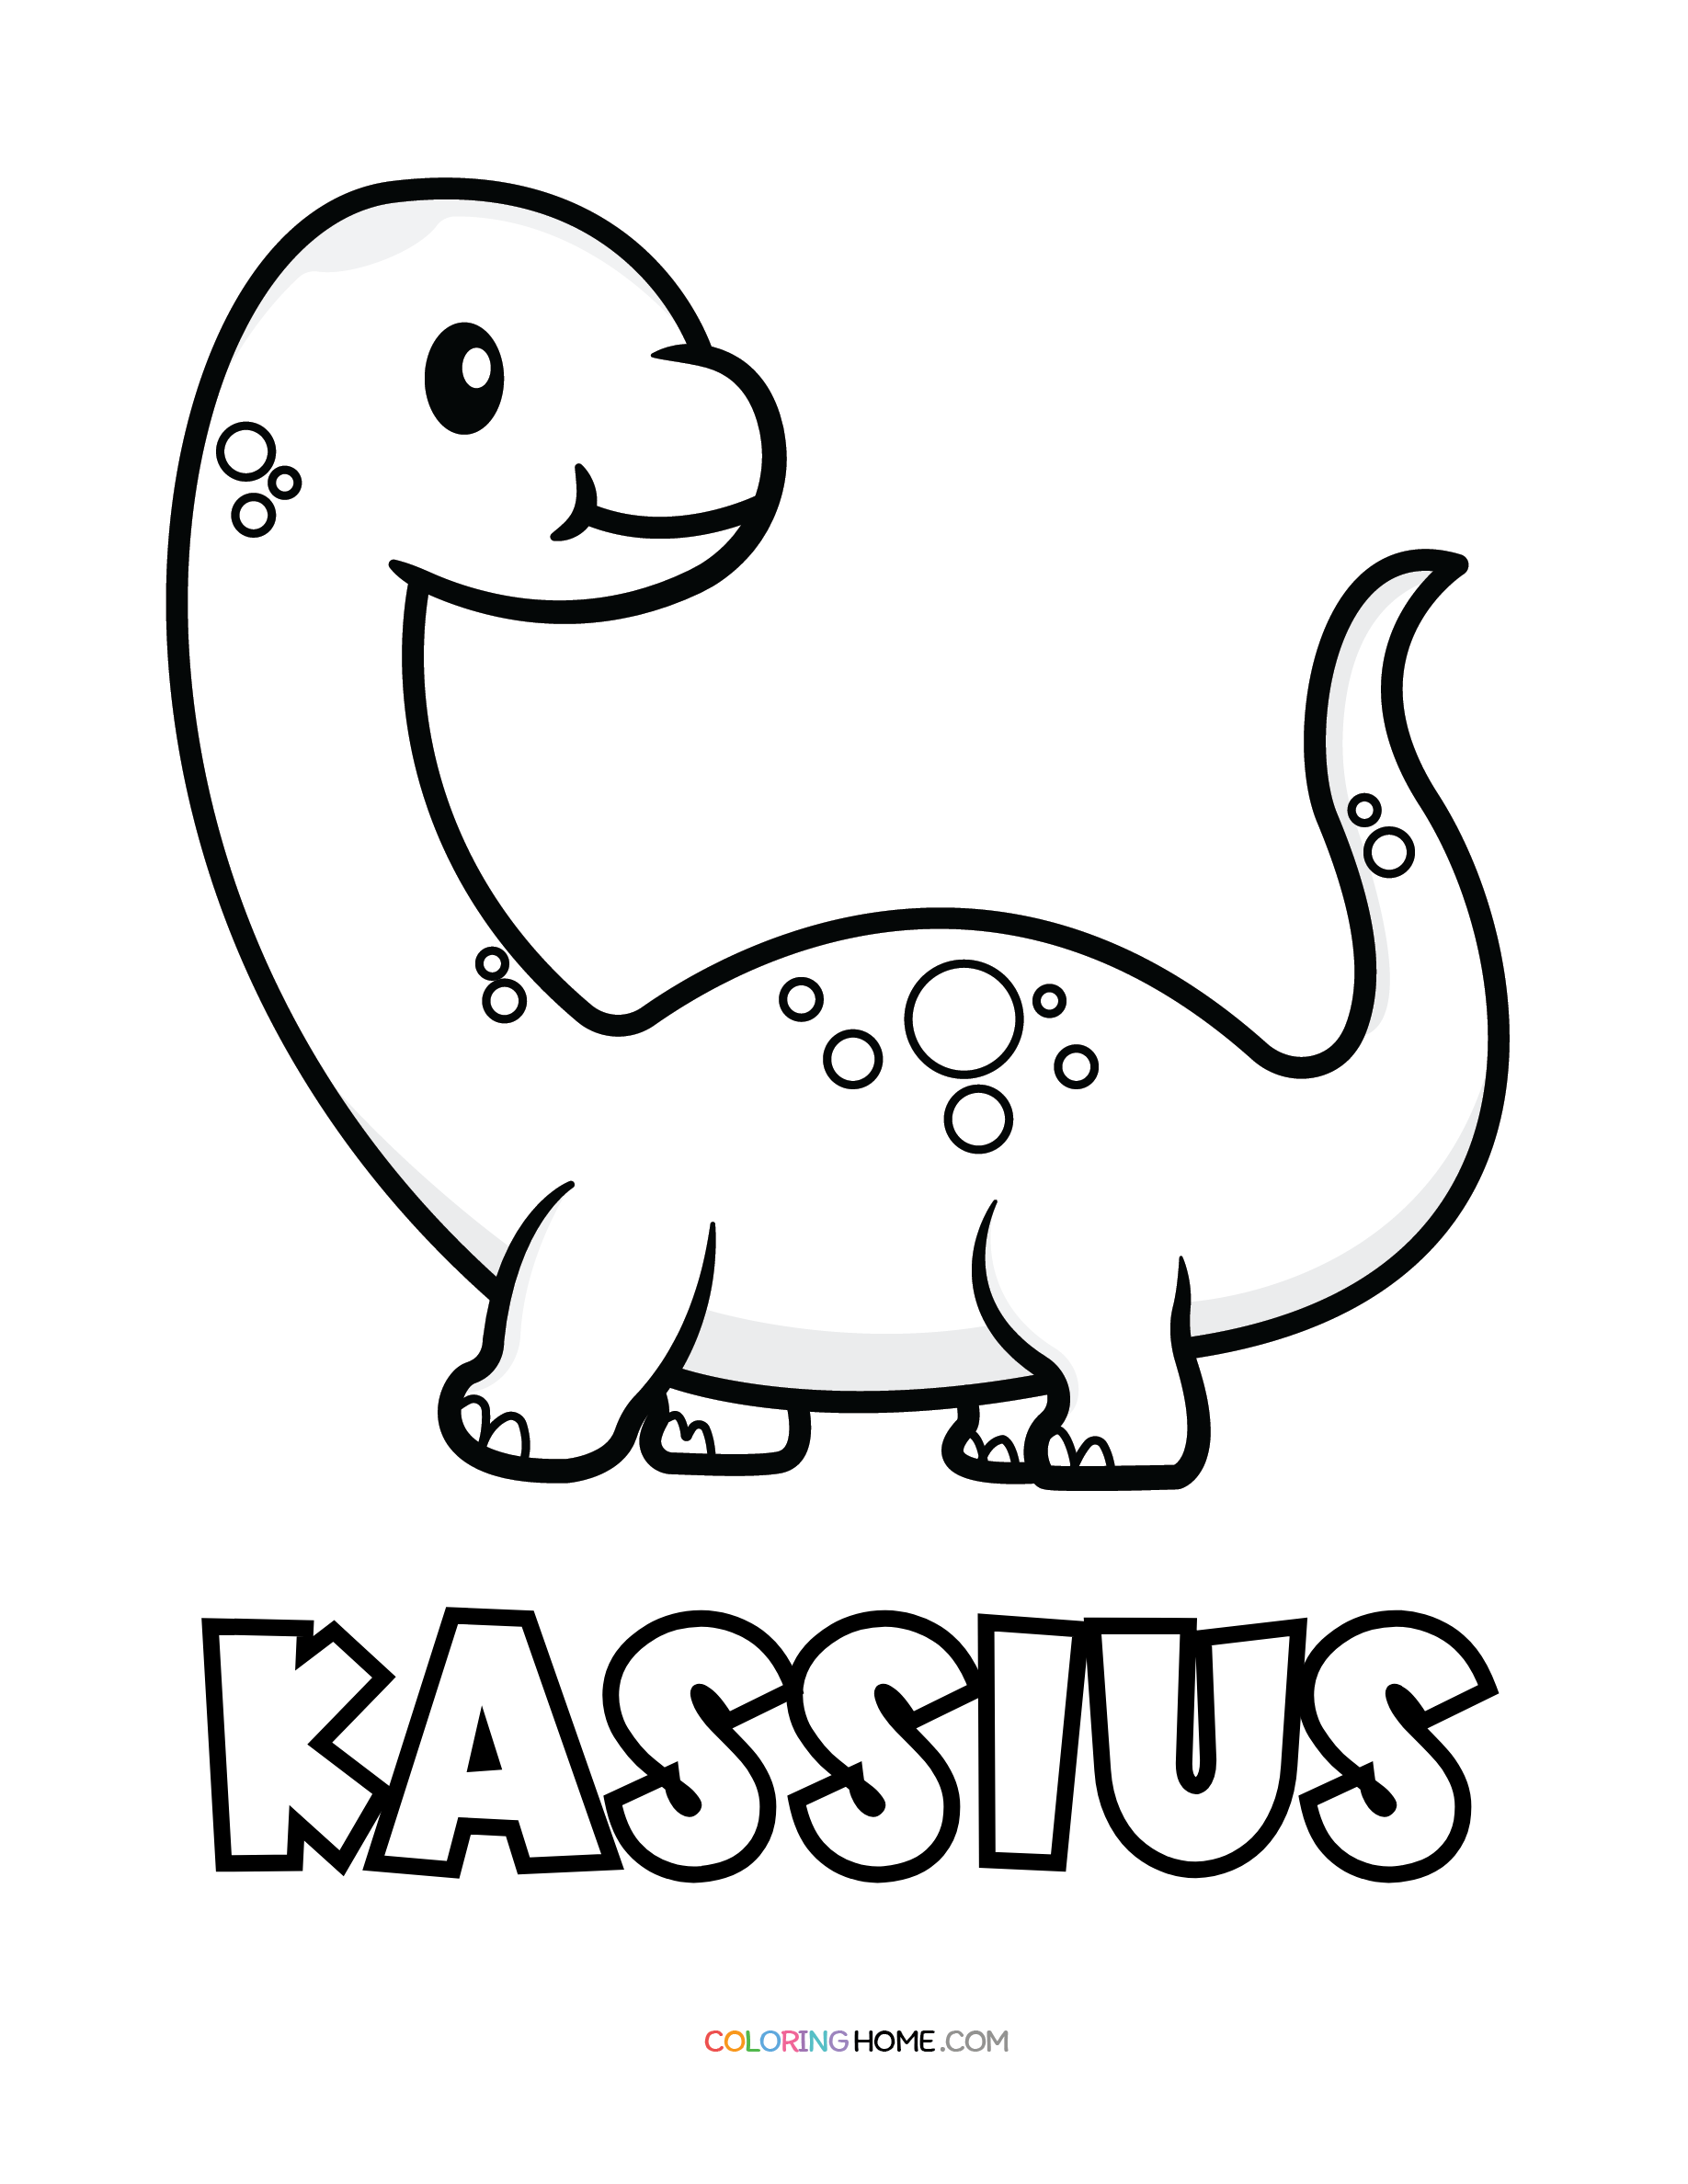 Kassius dinosaur coloring page